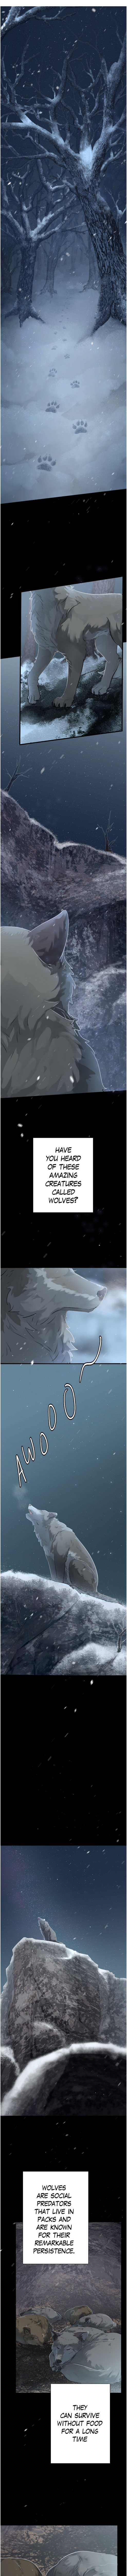 A Werewolf Boy - Chapter 0 Page 1